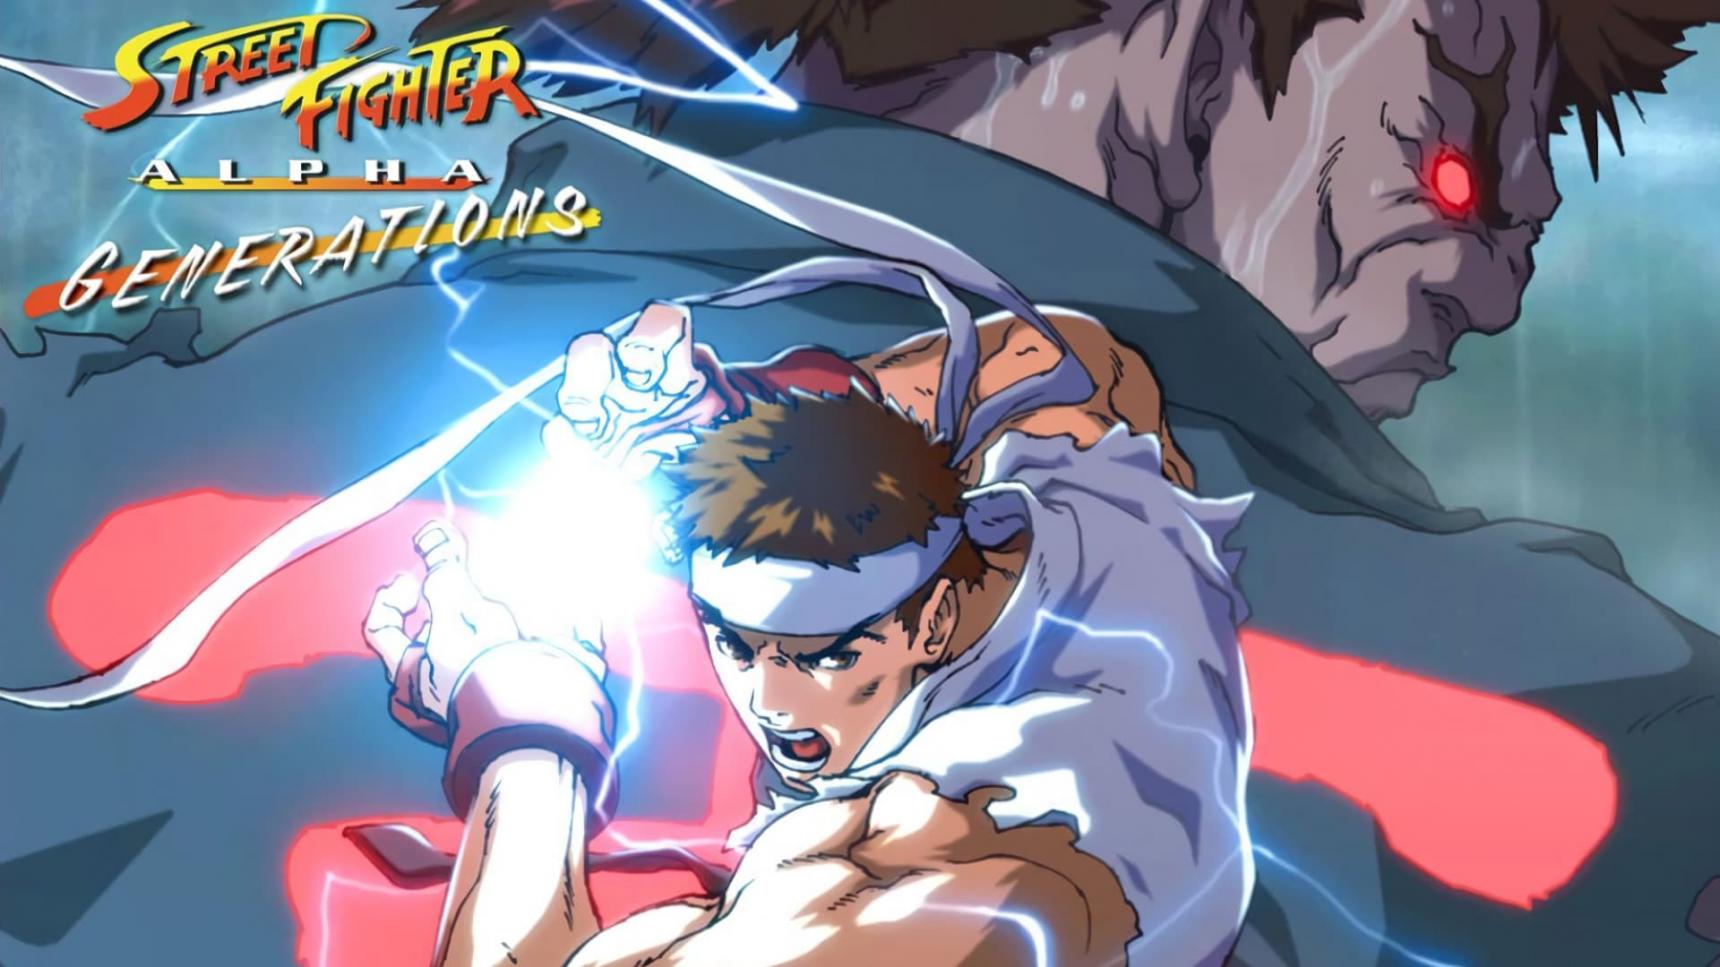 poster de Street Fighter Alpha: Generations